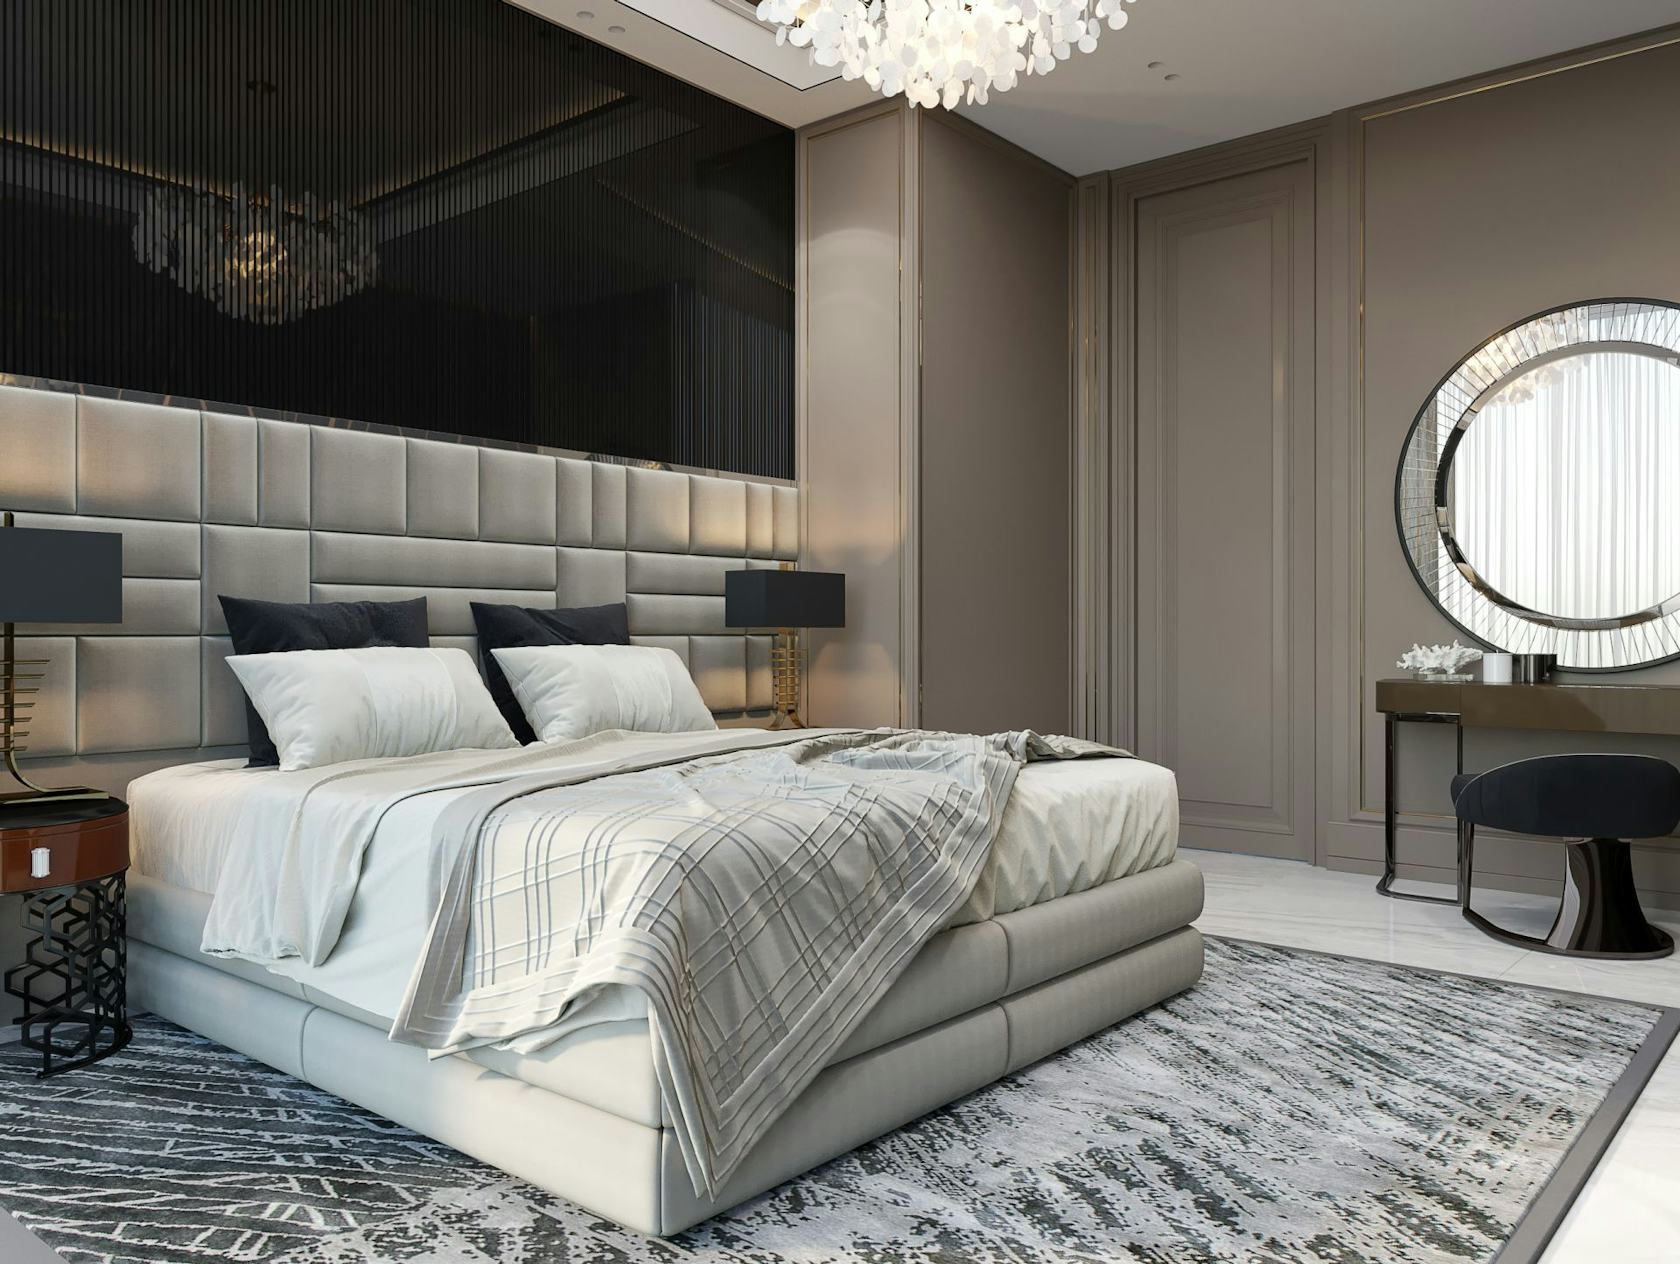 interior design indoors room bedroom rug furniture